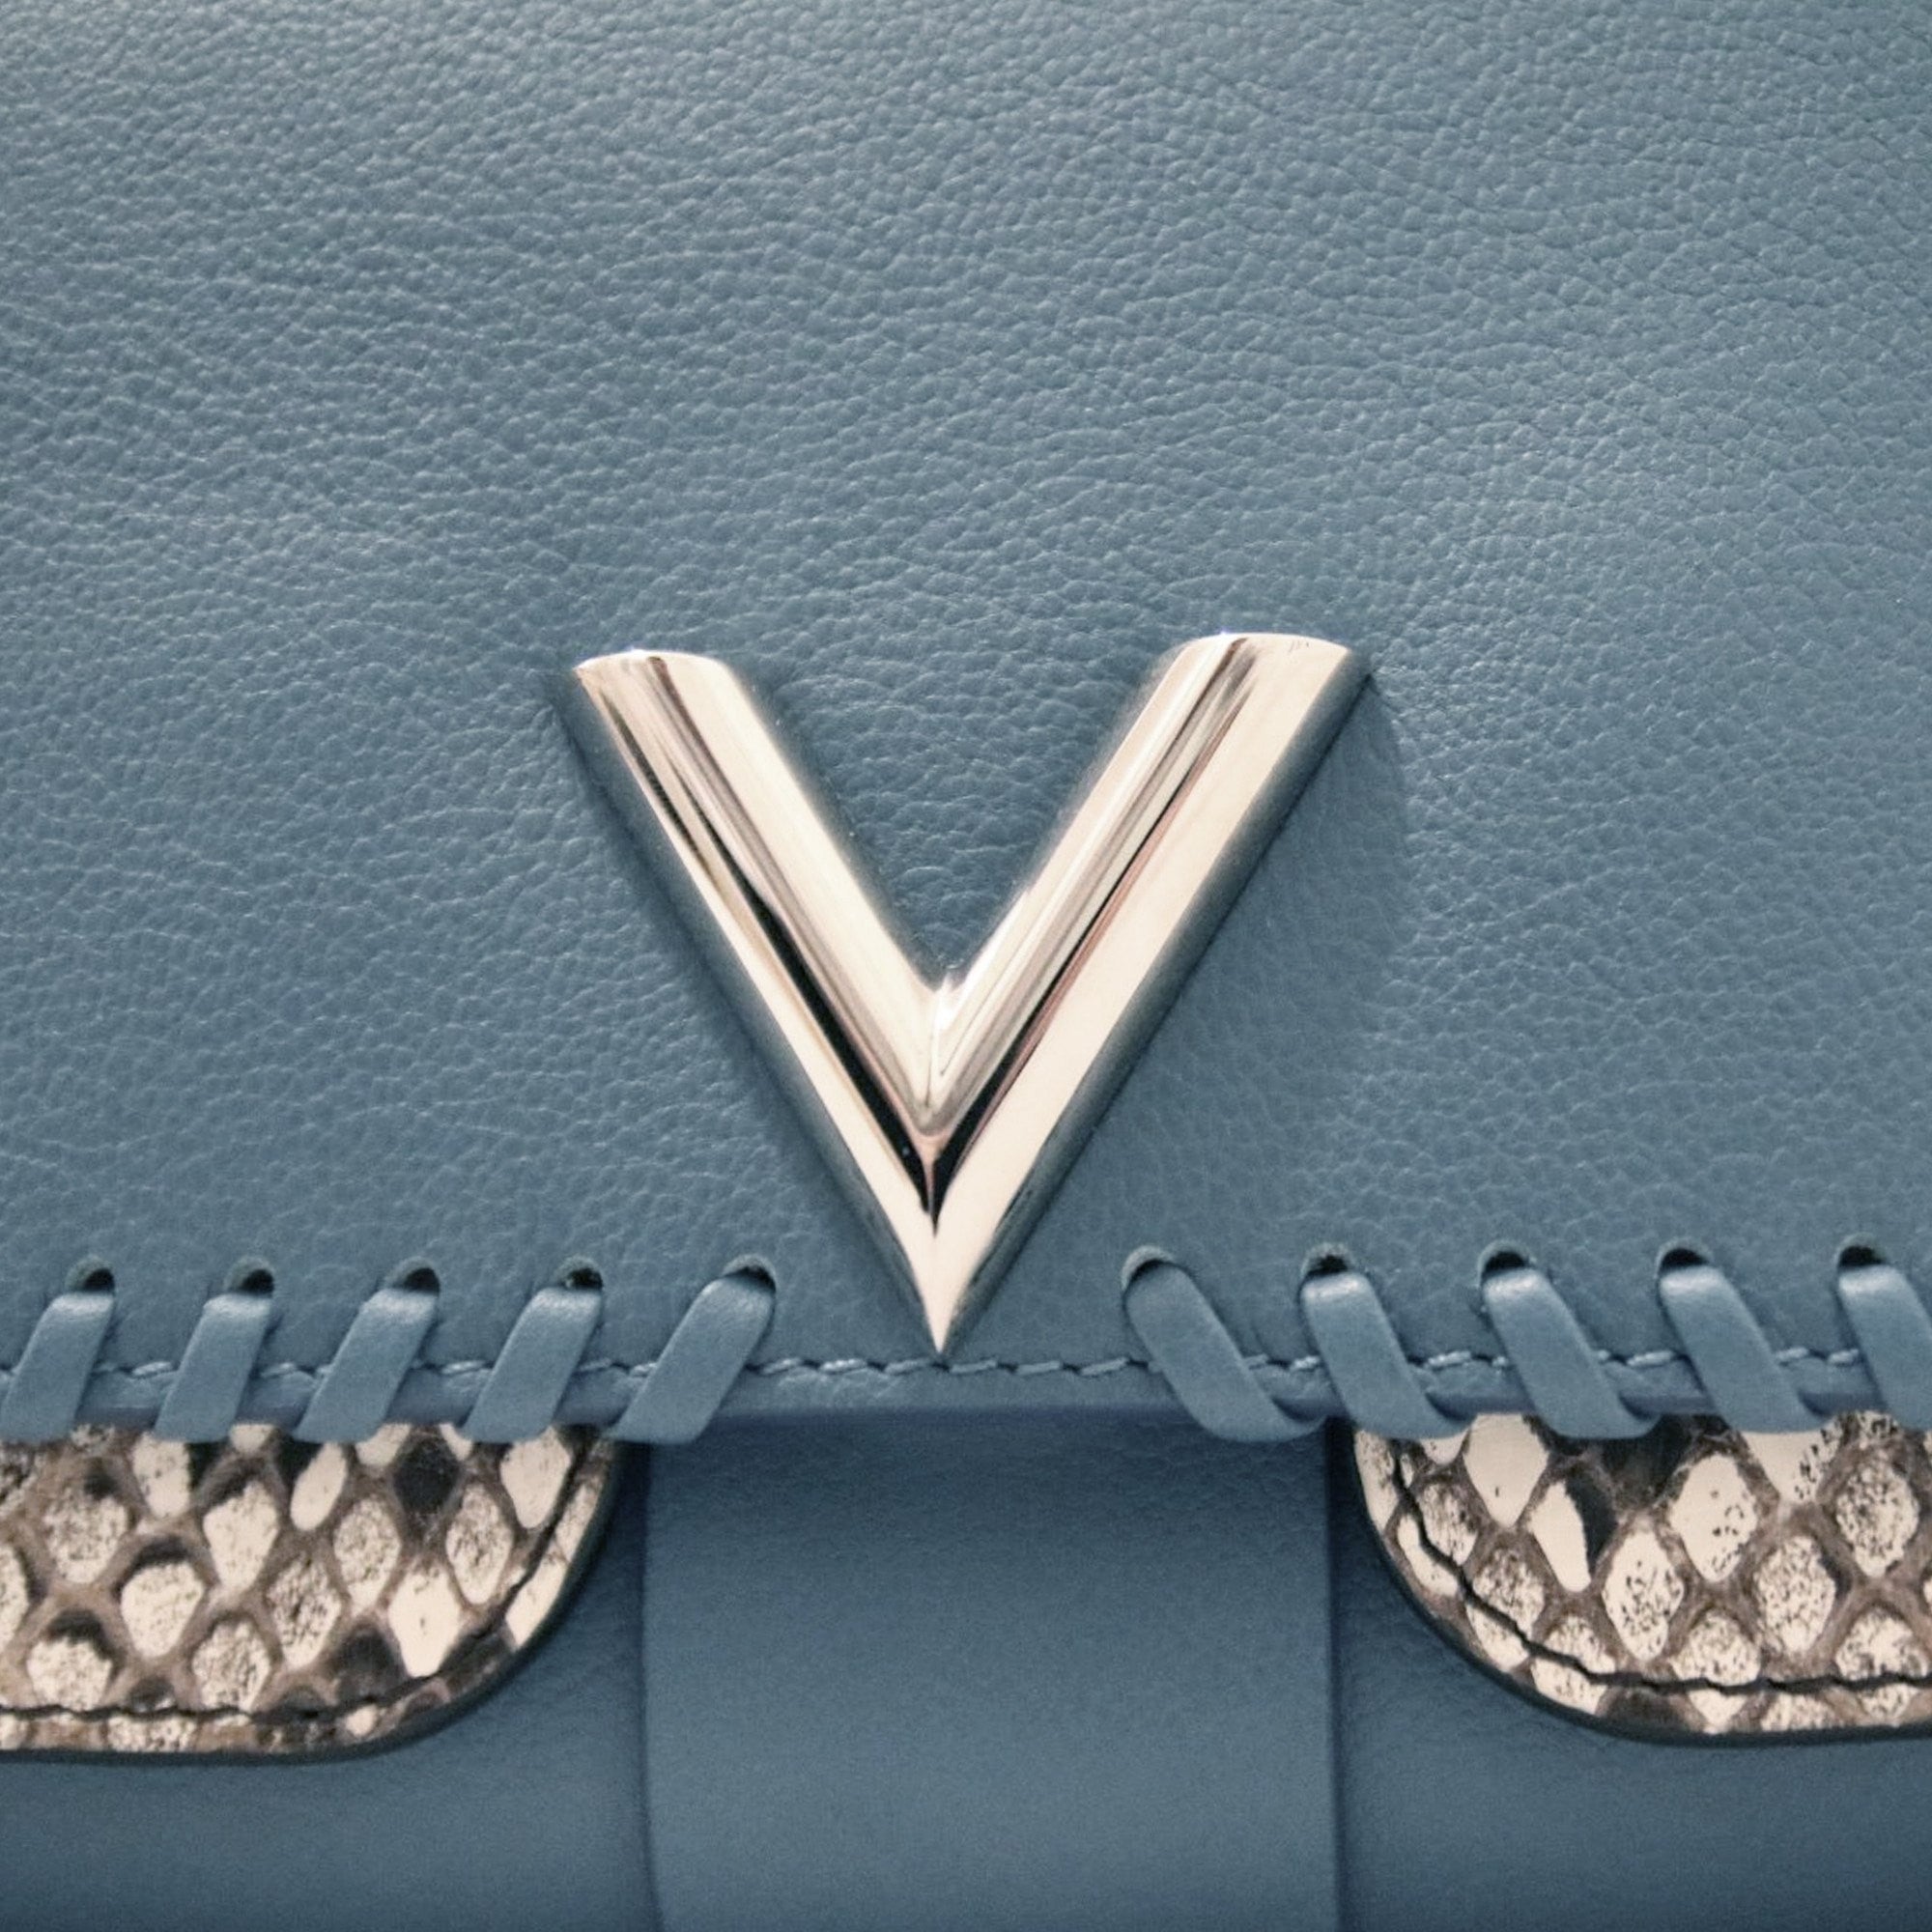 Louis Vuitton | Python Very Chain Bag | Pastel Baby Blue